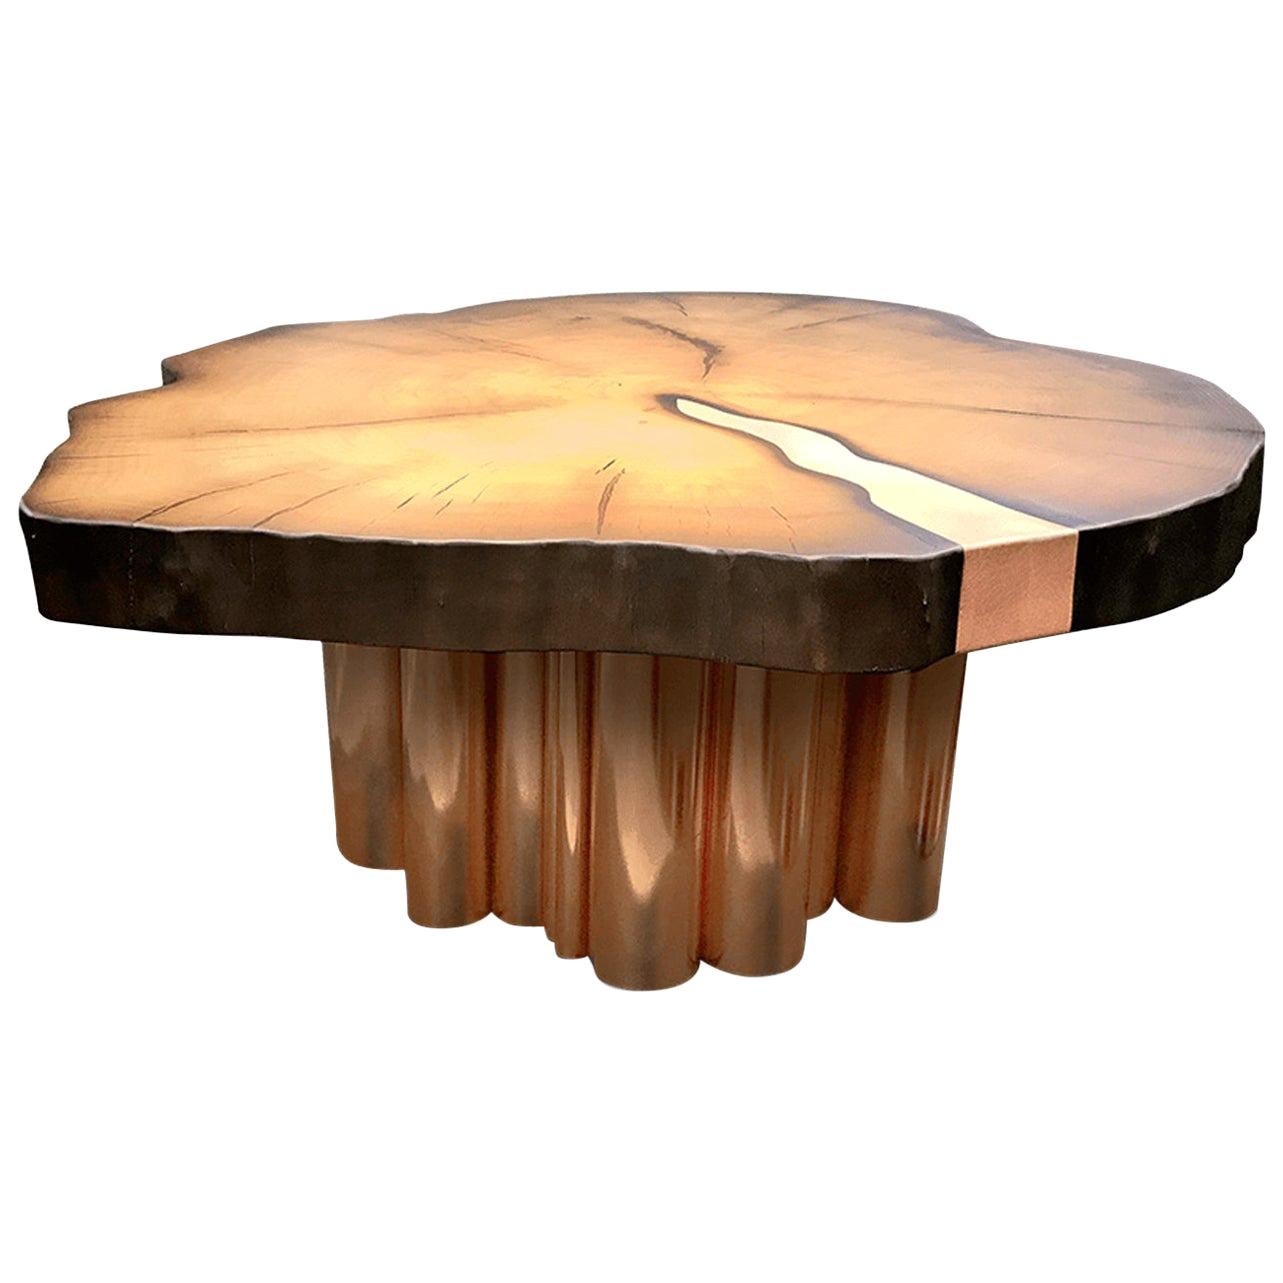 Moderner moderner runder Couchtisch aus Holz mit naturbelassener Kante, Kupfer oder Messing